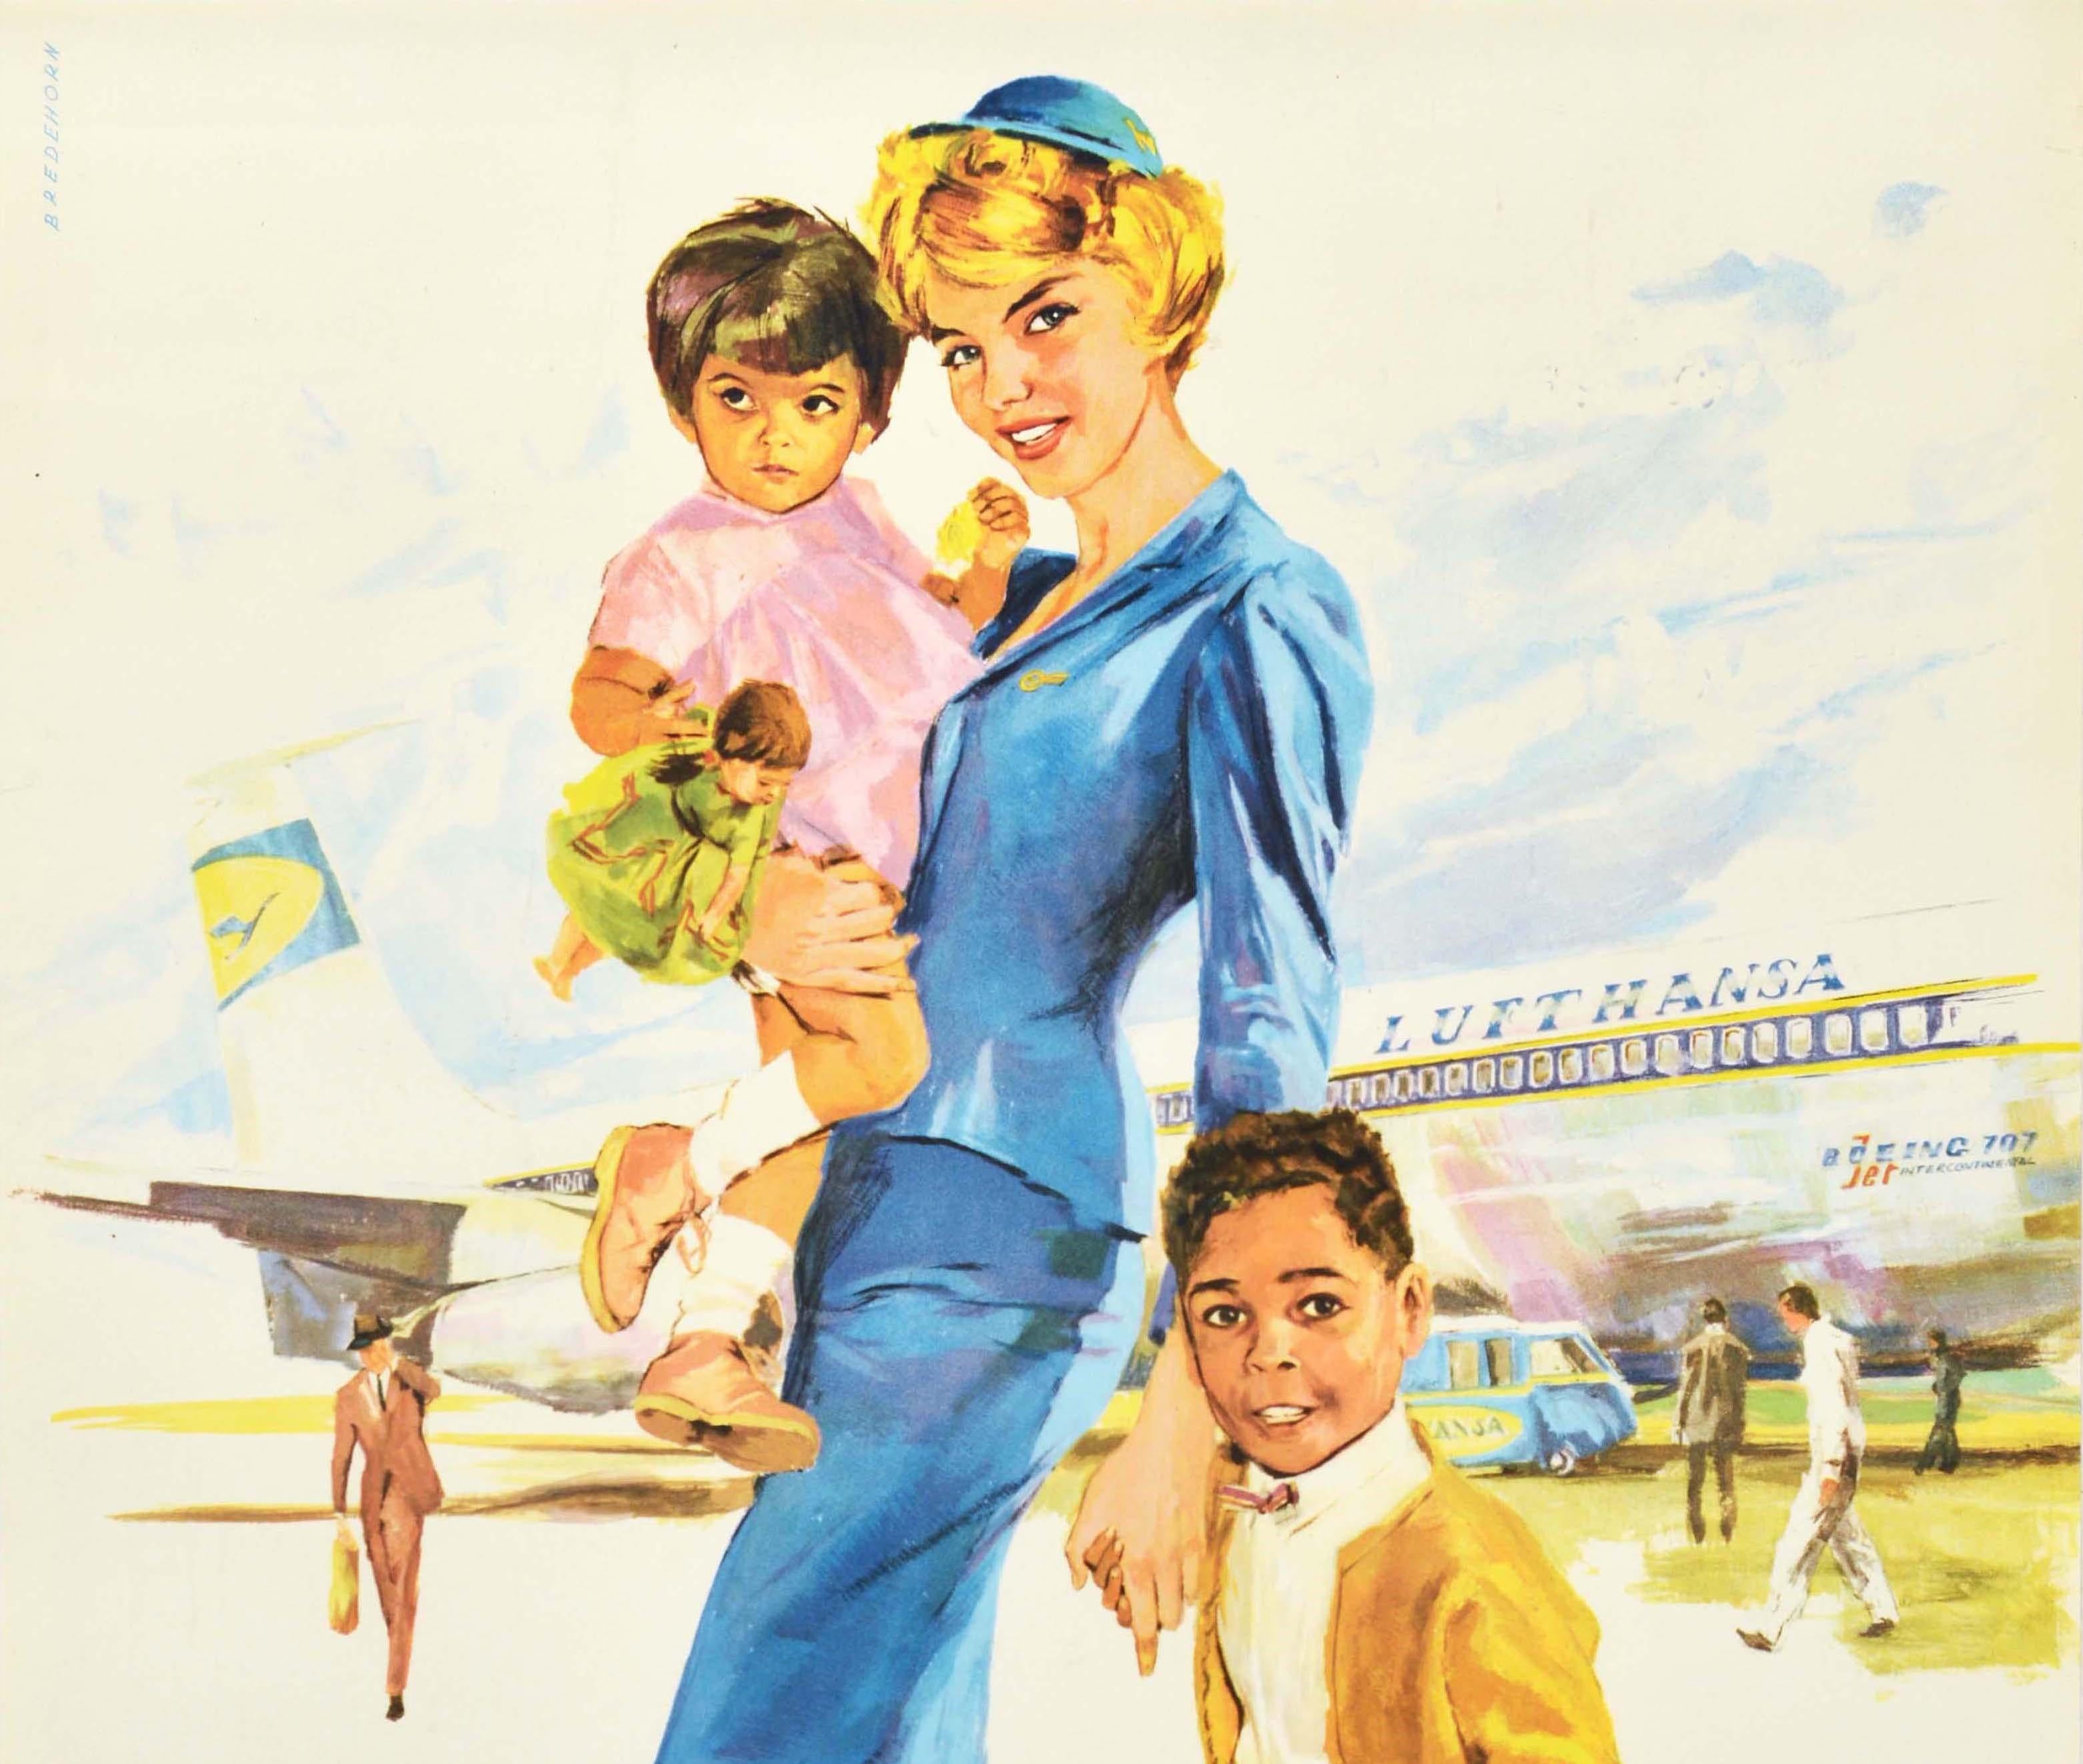 Original Vintage Travel Poster Lufthansa German Airlines Children Flying Alone - Print by Bredehorn